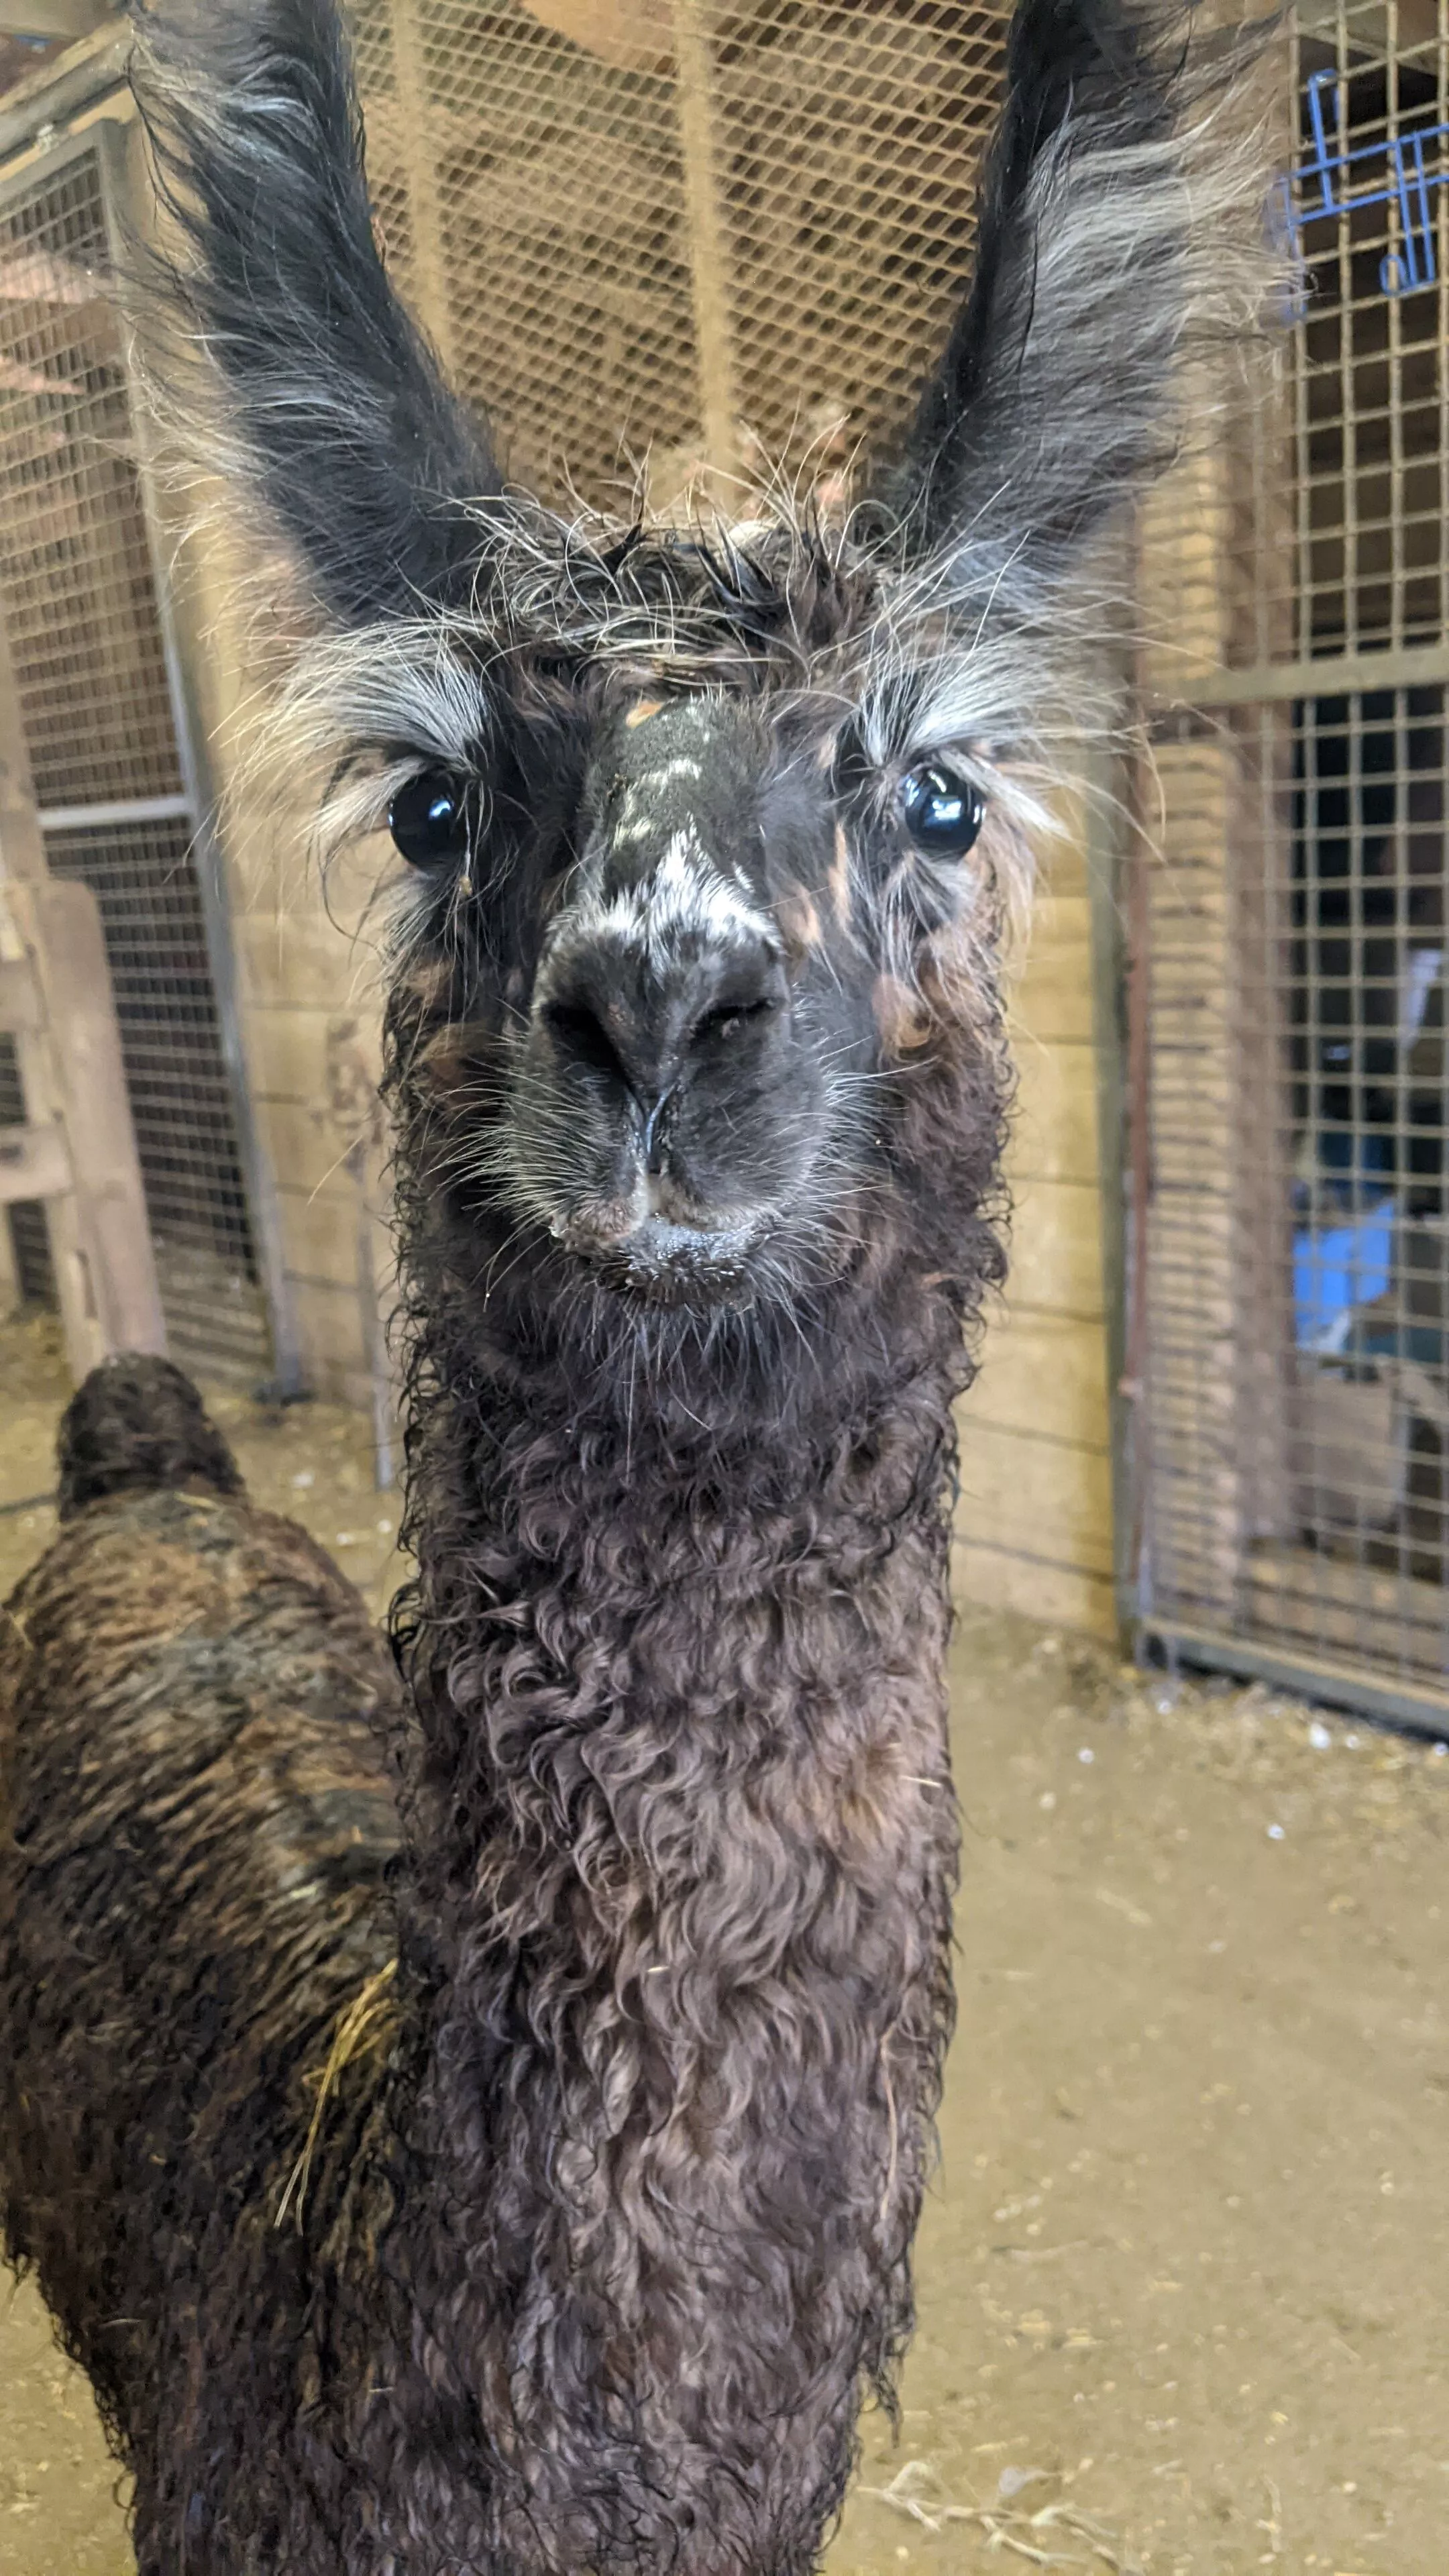 An image of a wet llama named Florian after a rainstorm